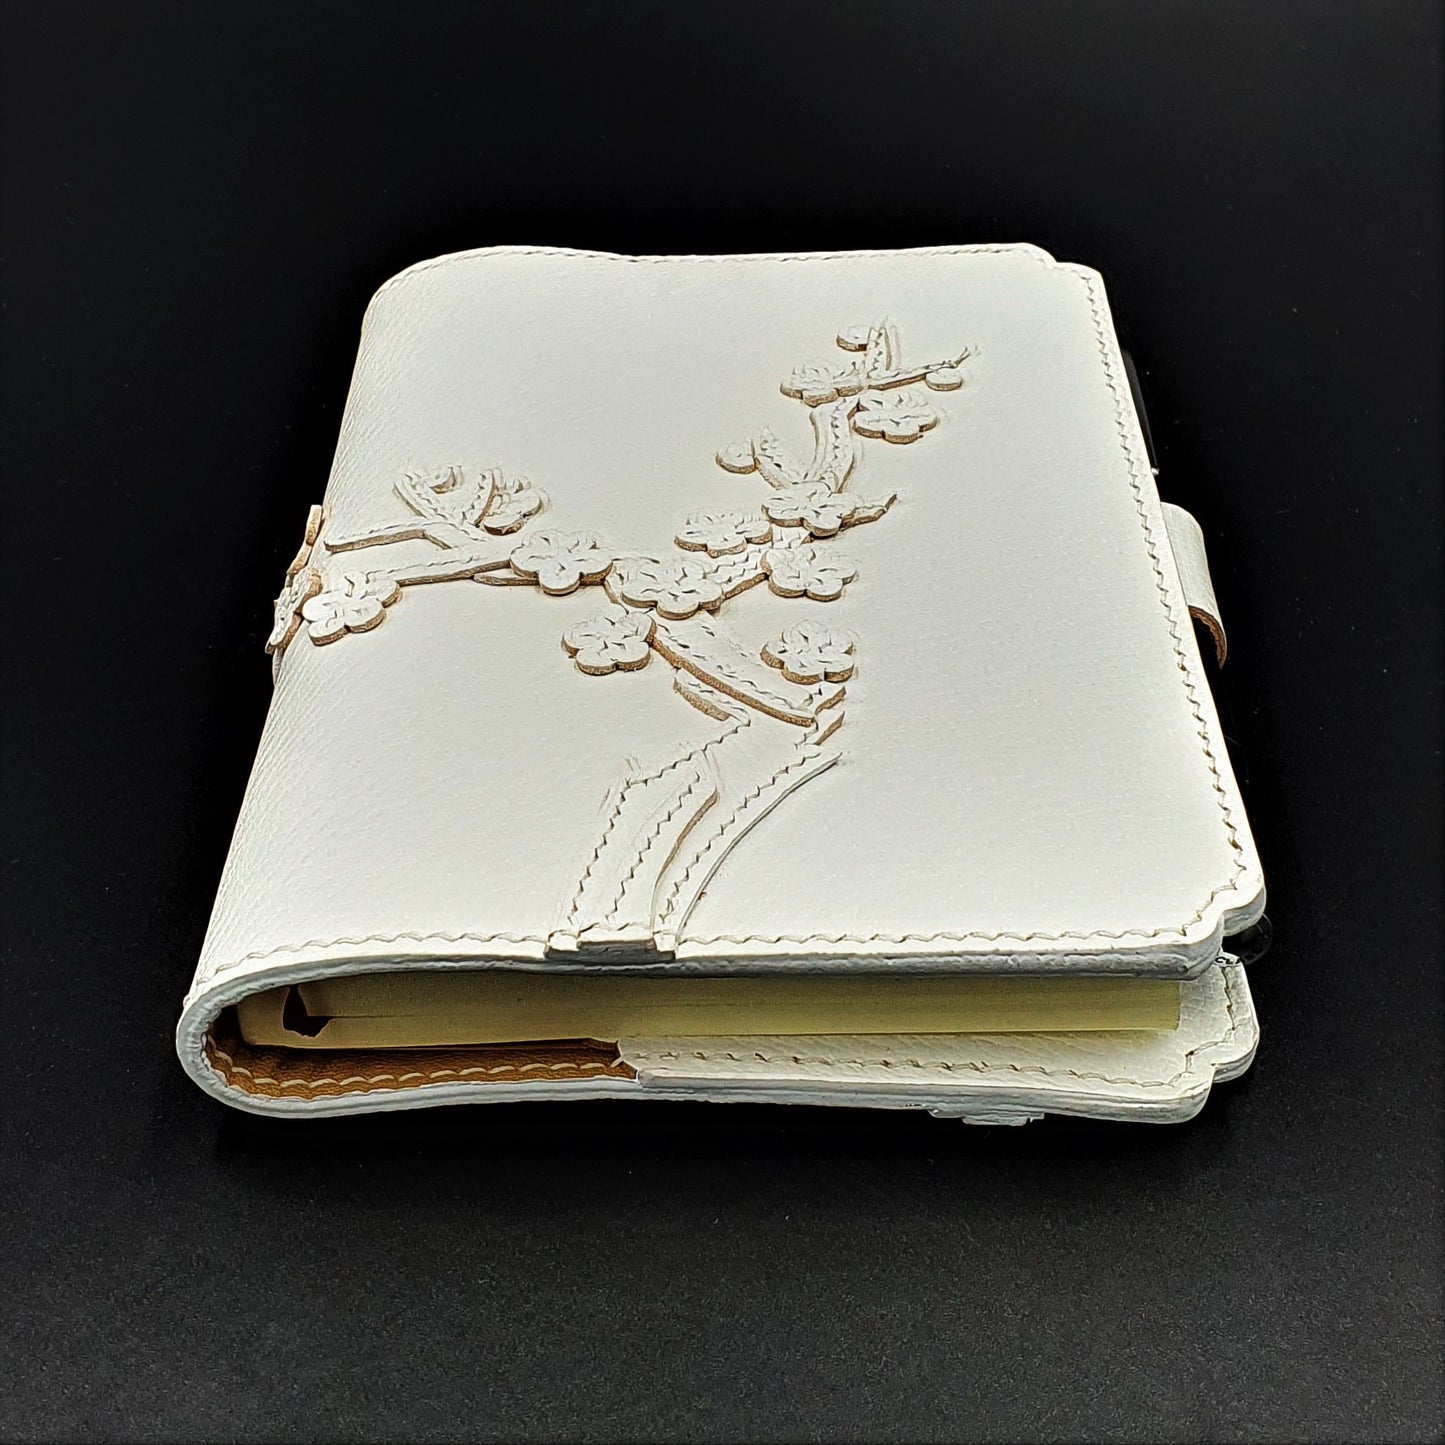 Studio Arkademie MING DH PLUM BLOSSOM A5 Portrait Notebook Sleeve, White